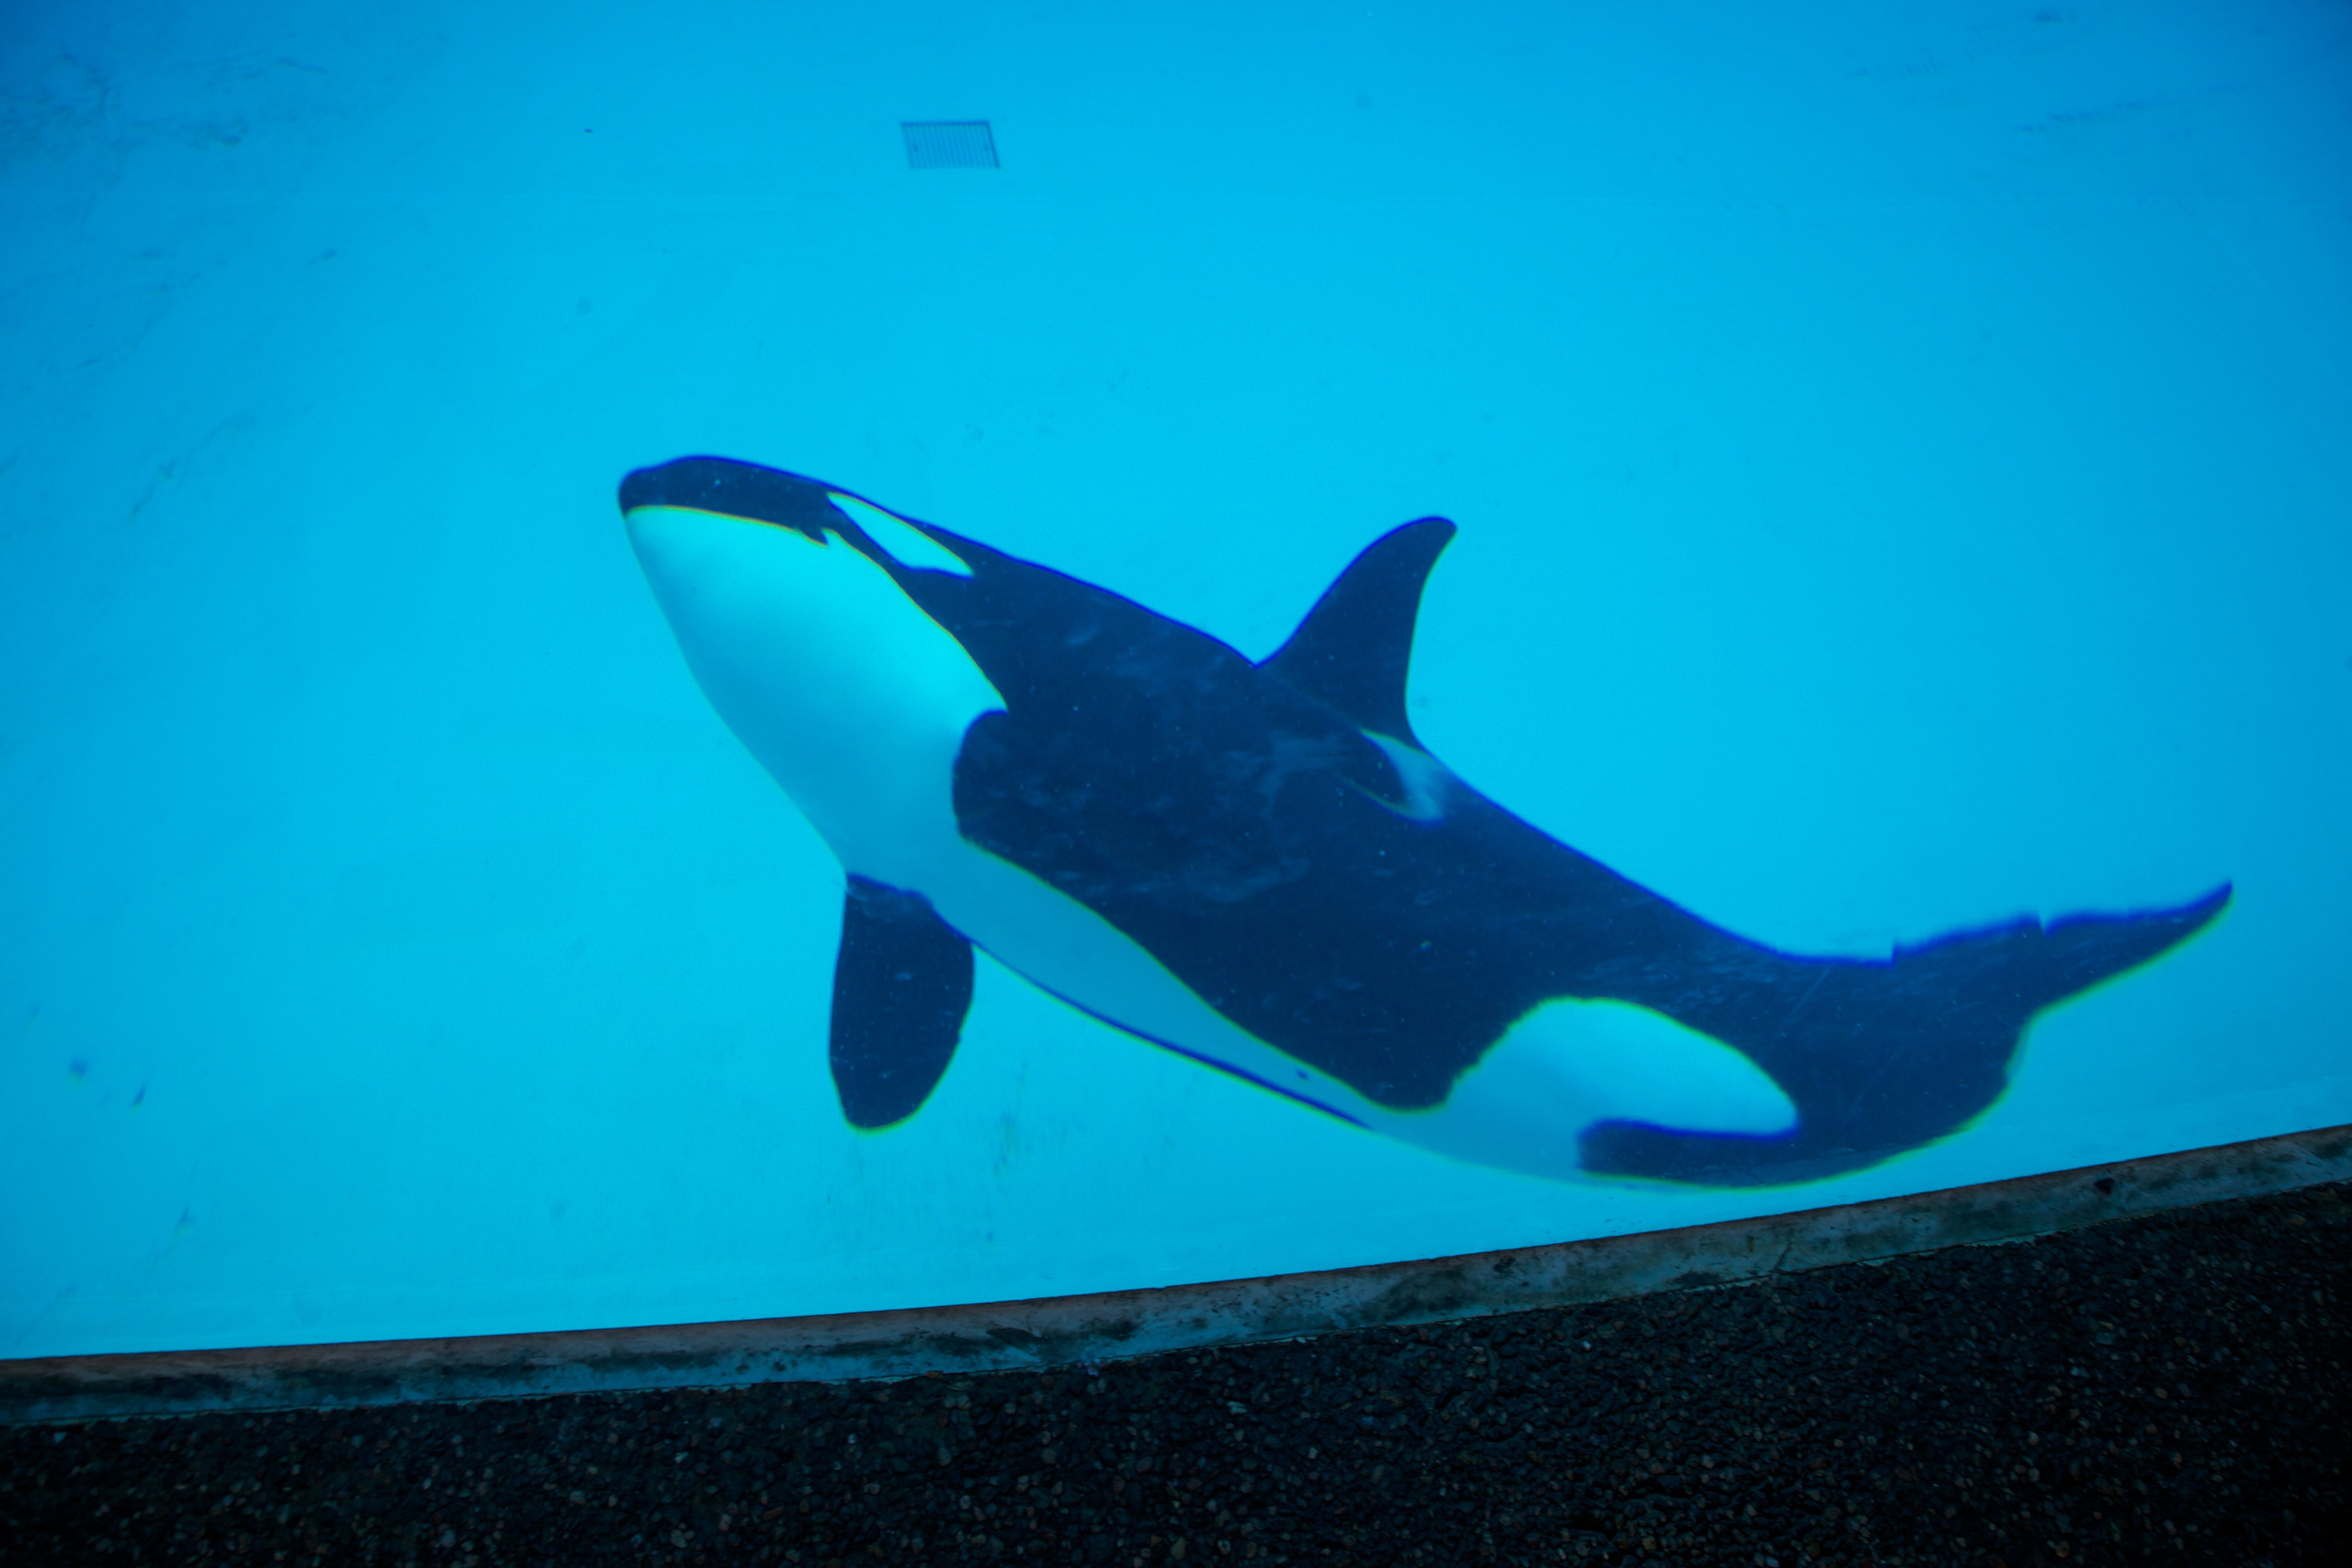 Orca tank at SeaWorld San Diego, 2011.